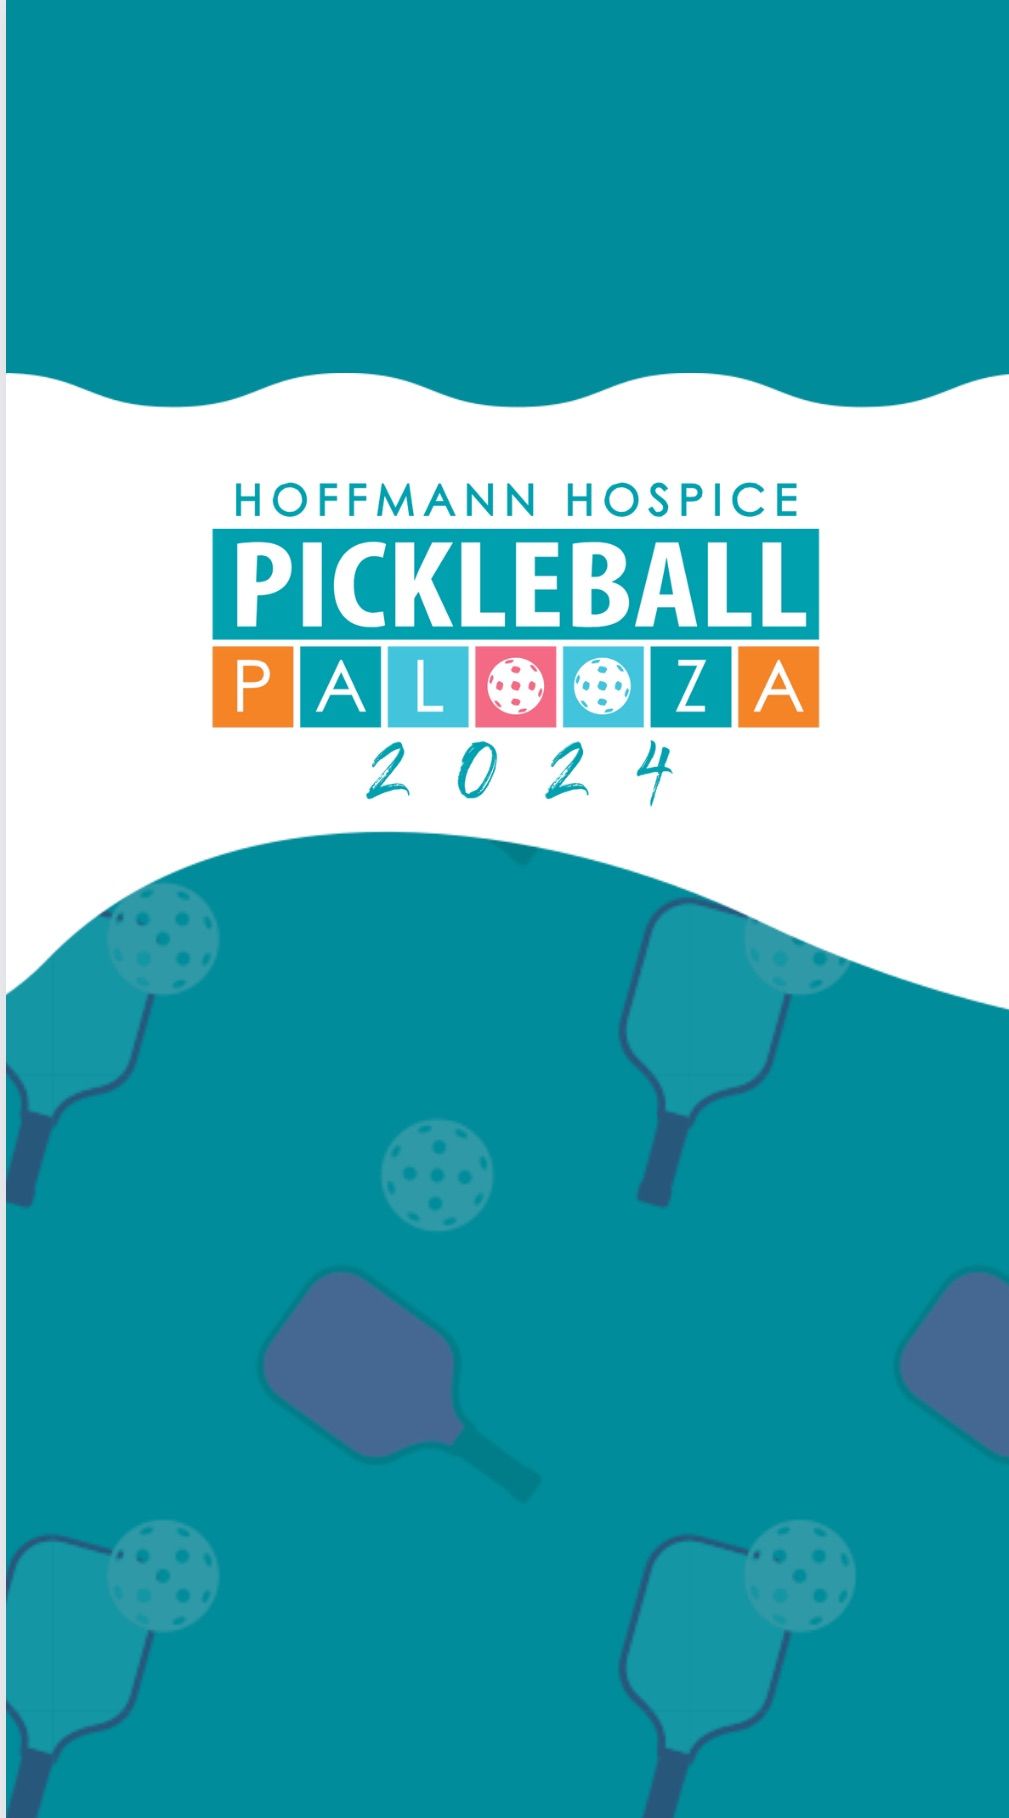 Hoffmann Hospice Pickleball Palooza 2024